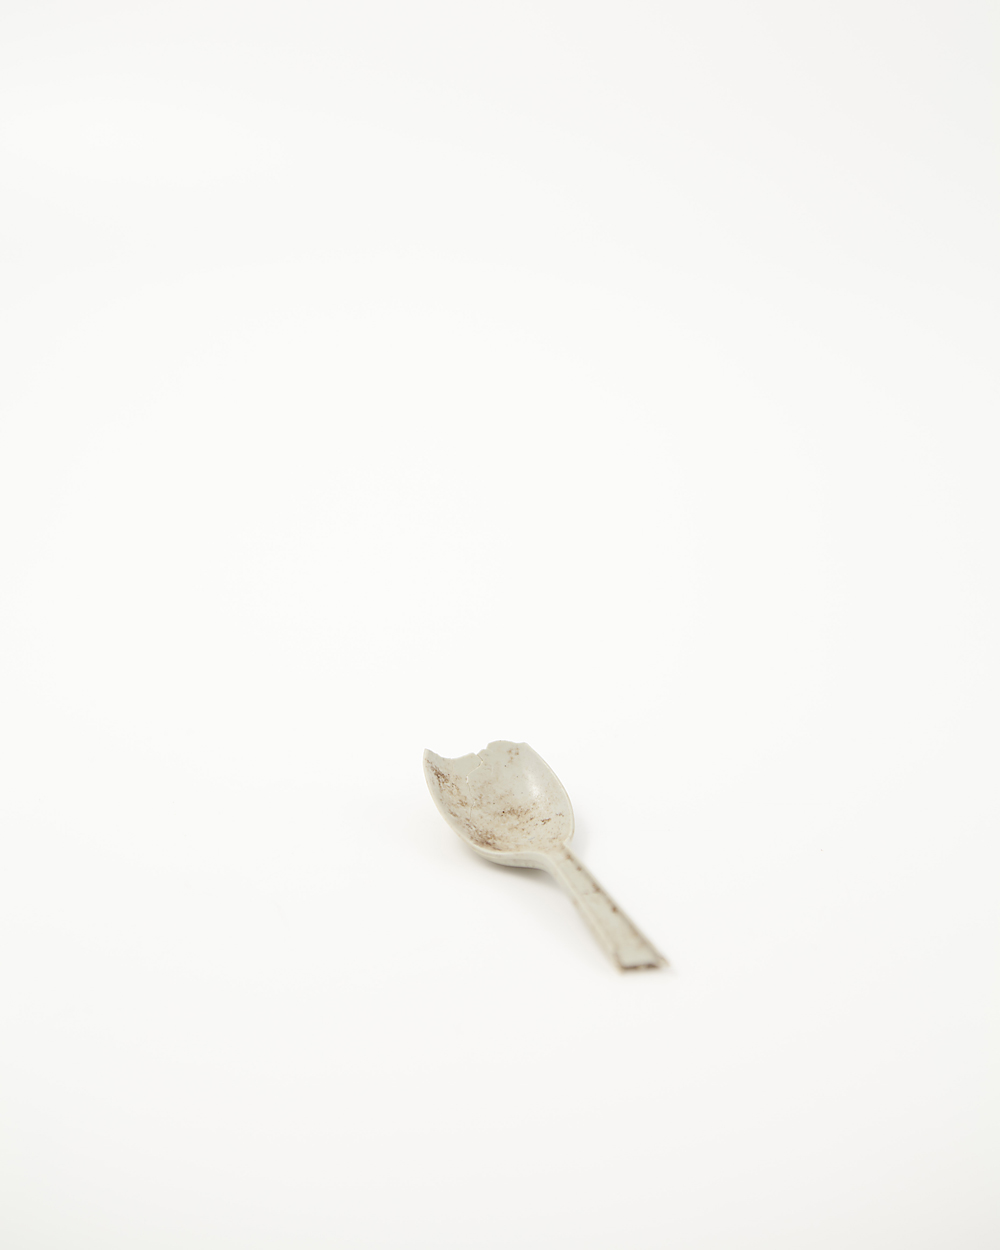 Artifact-Plastic Spoon